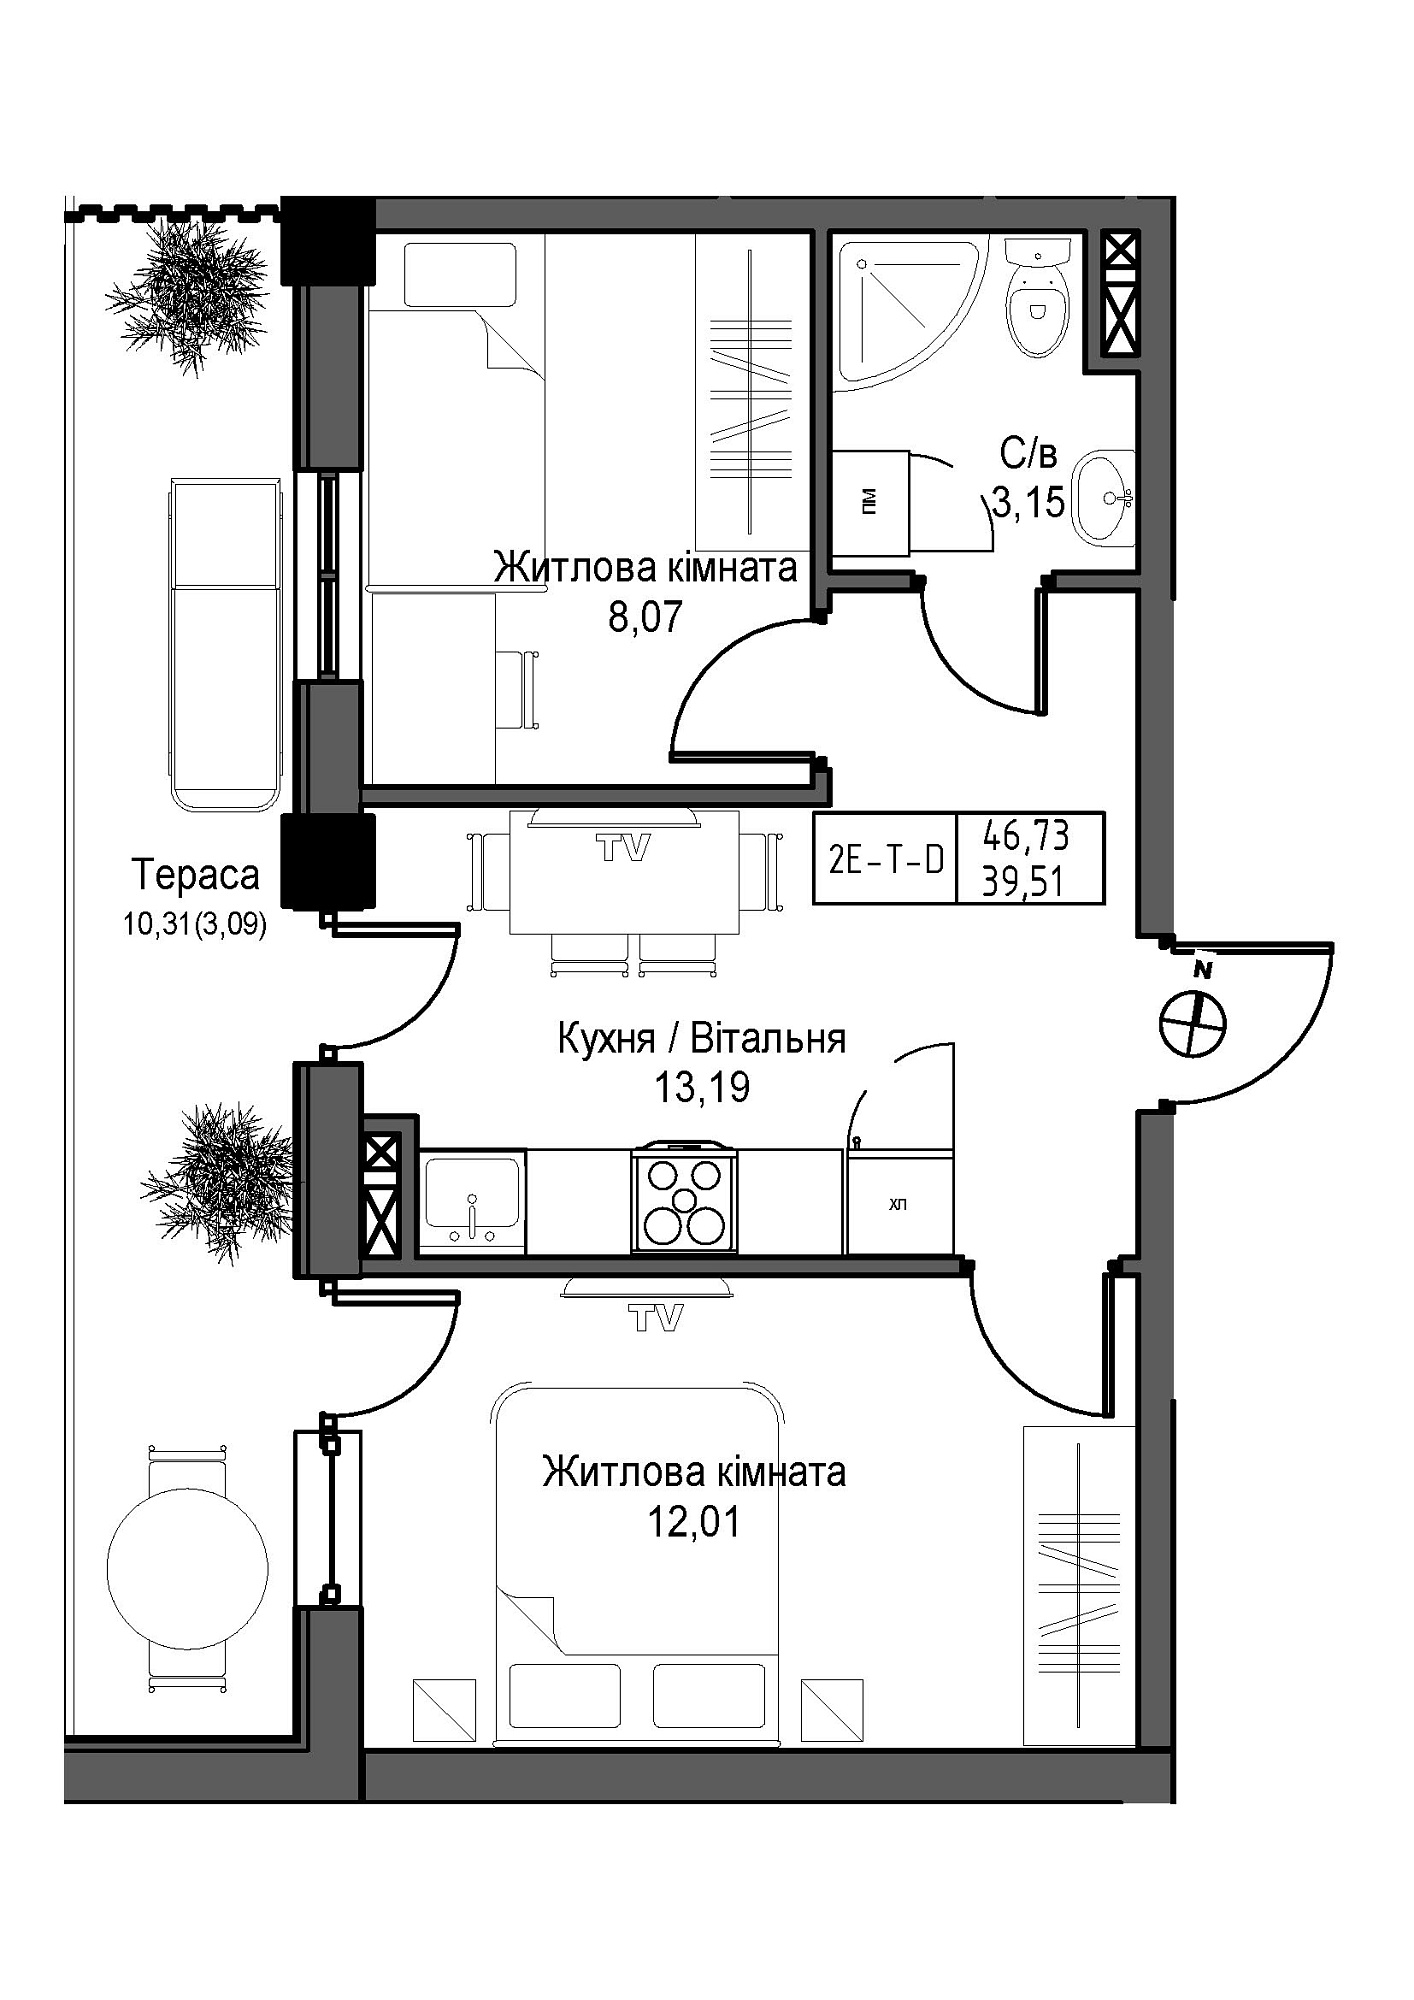 Планування 2-к квартира площею 39.51м2, UM-007-05/0001.